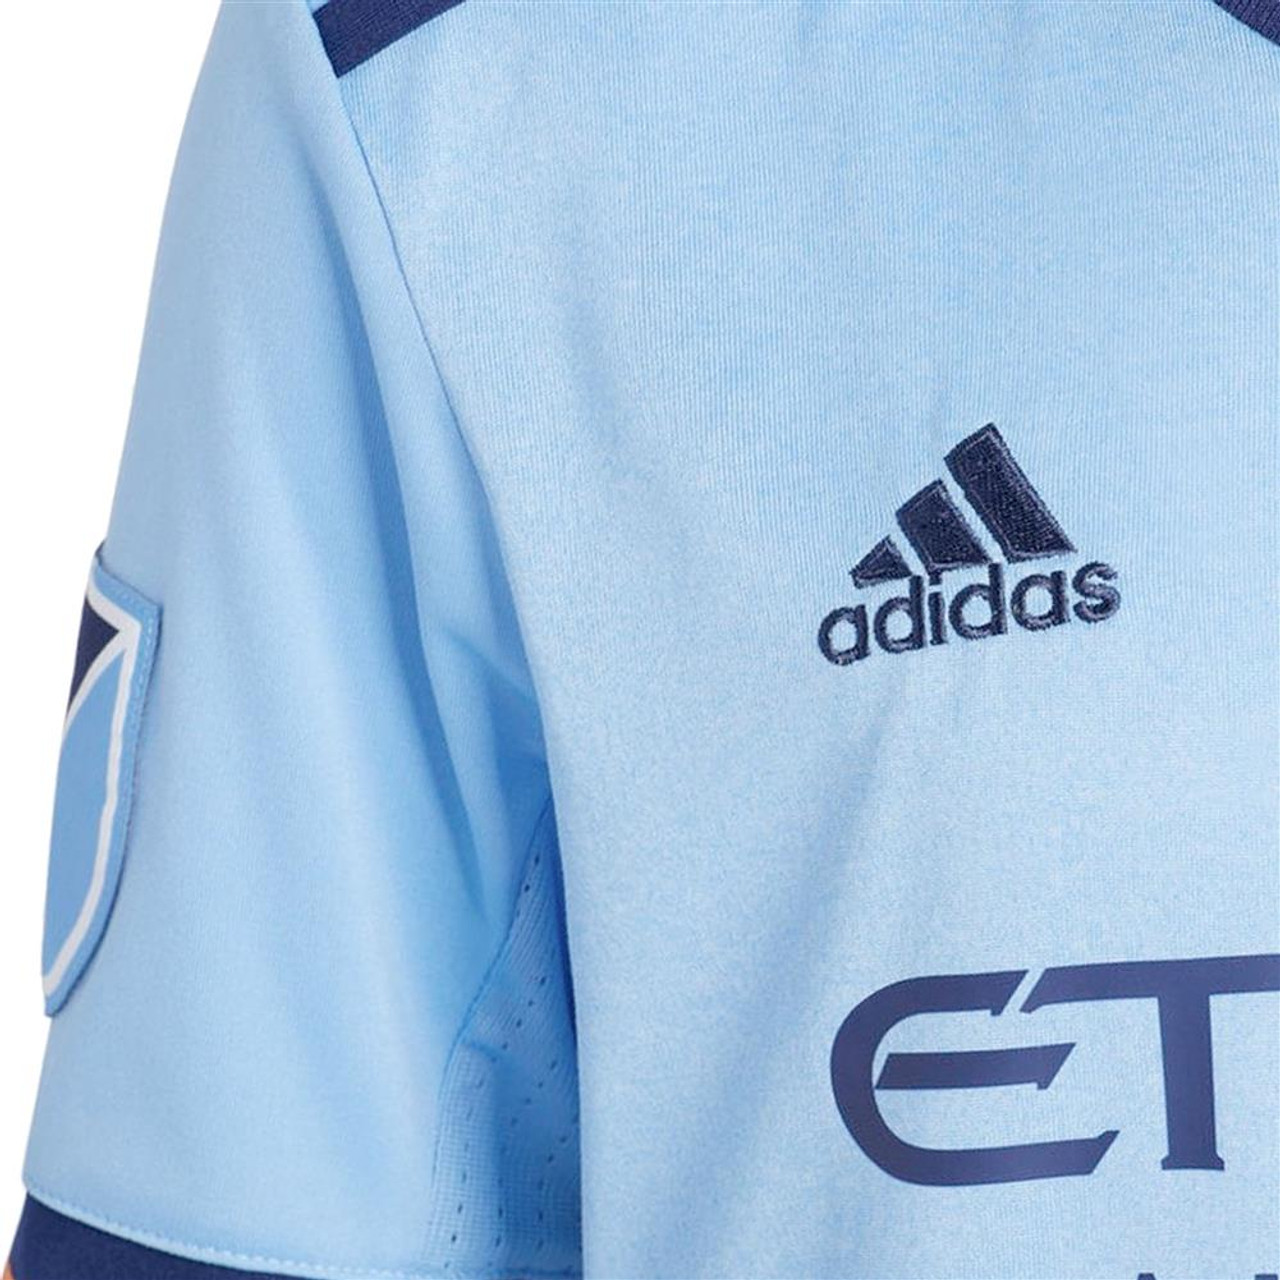 NEW Majestic Youth Boy's Soccer Uniform Jersey Color Royal Blue Size XL  XLarge